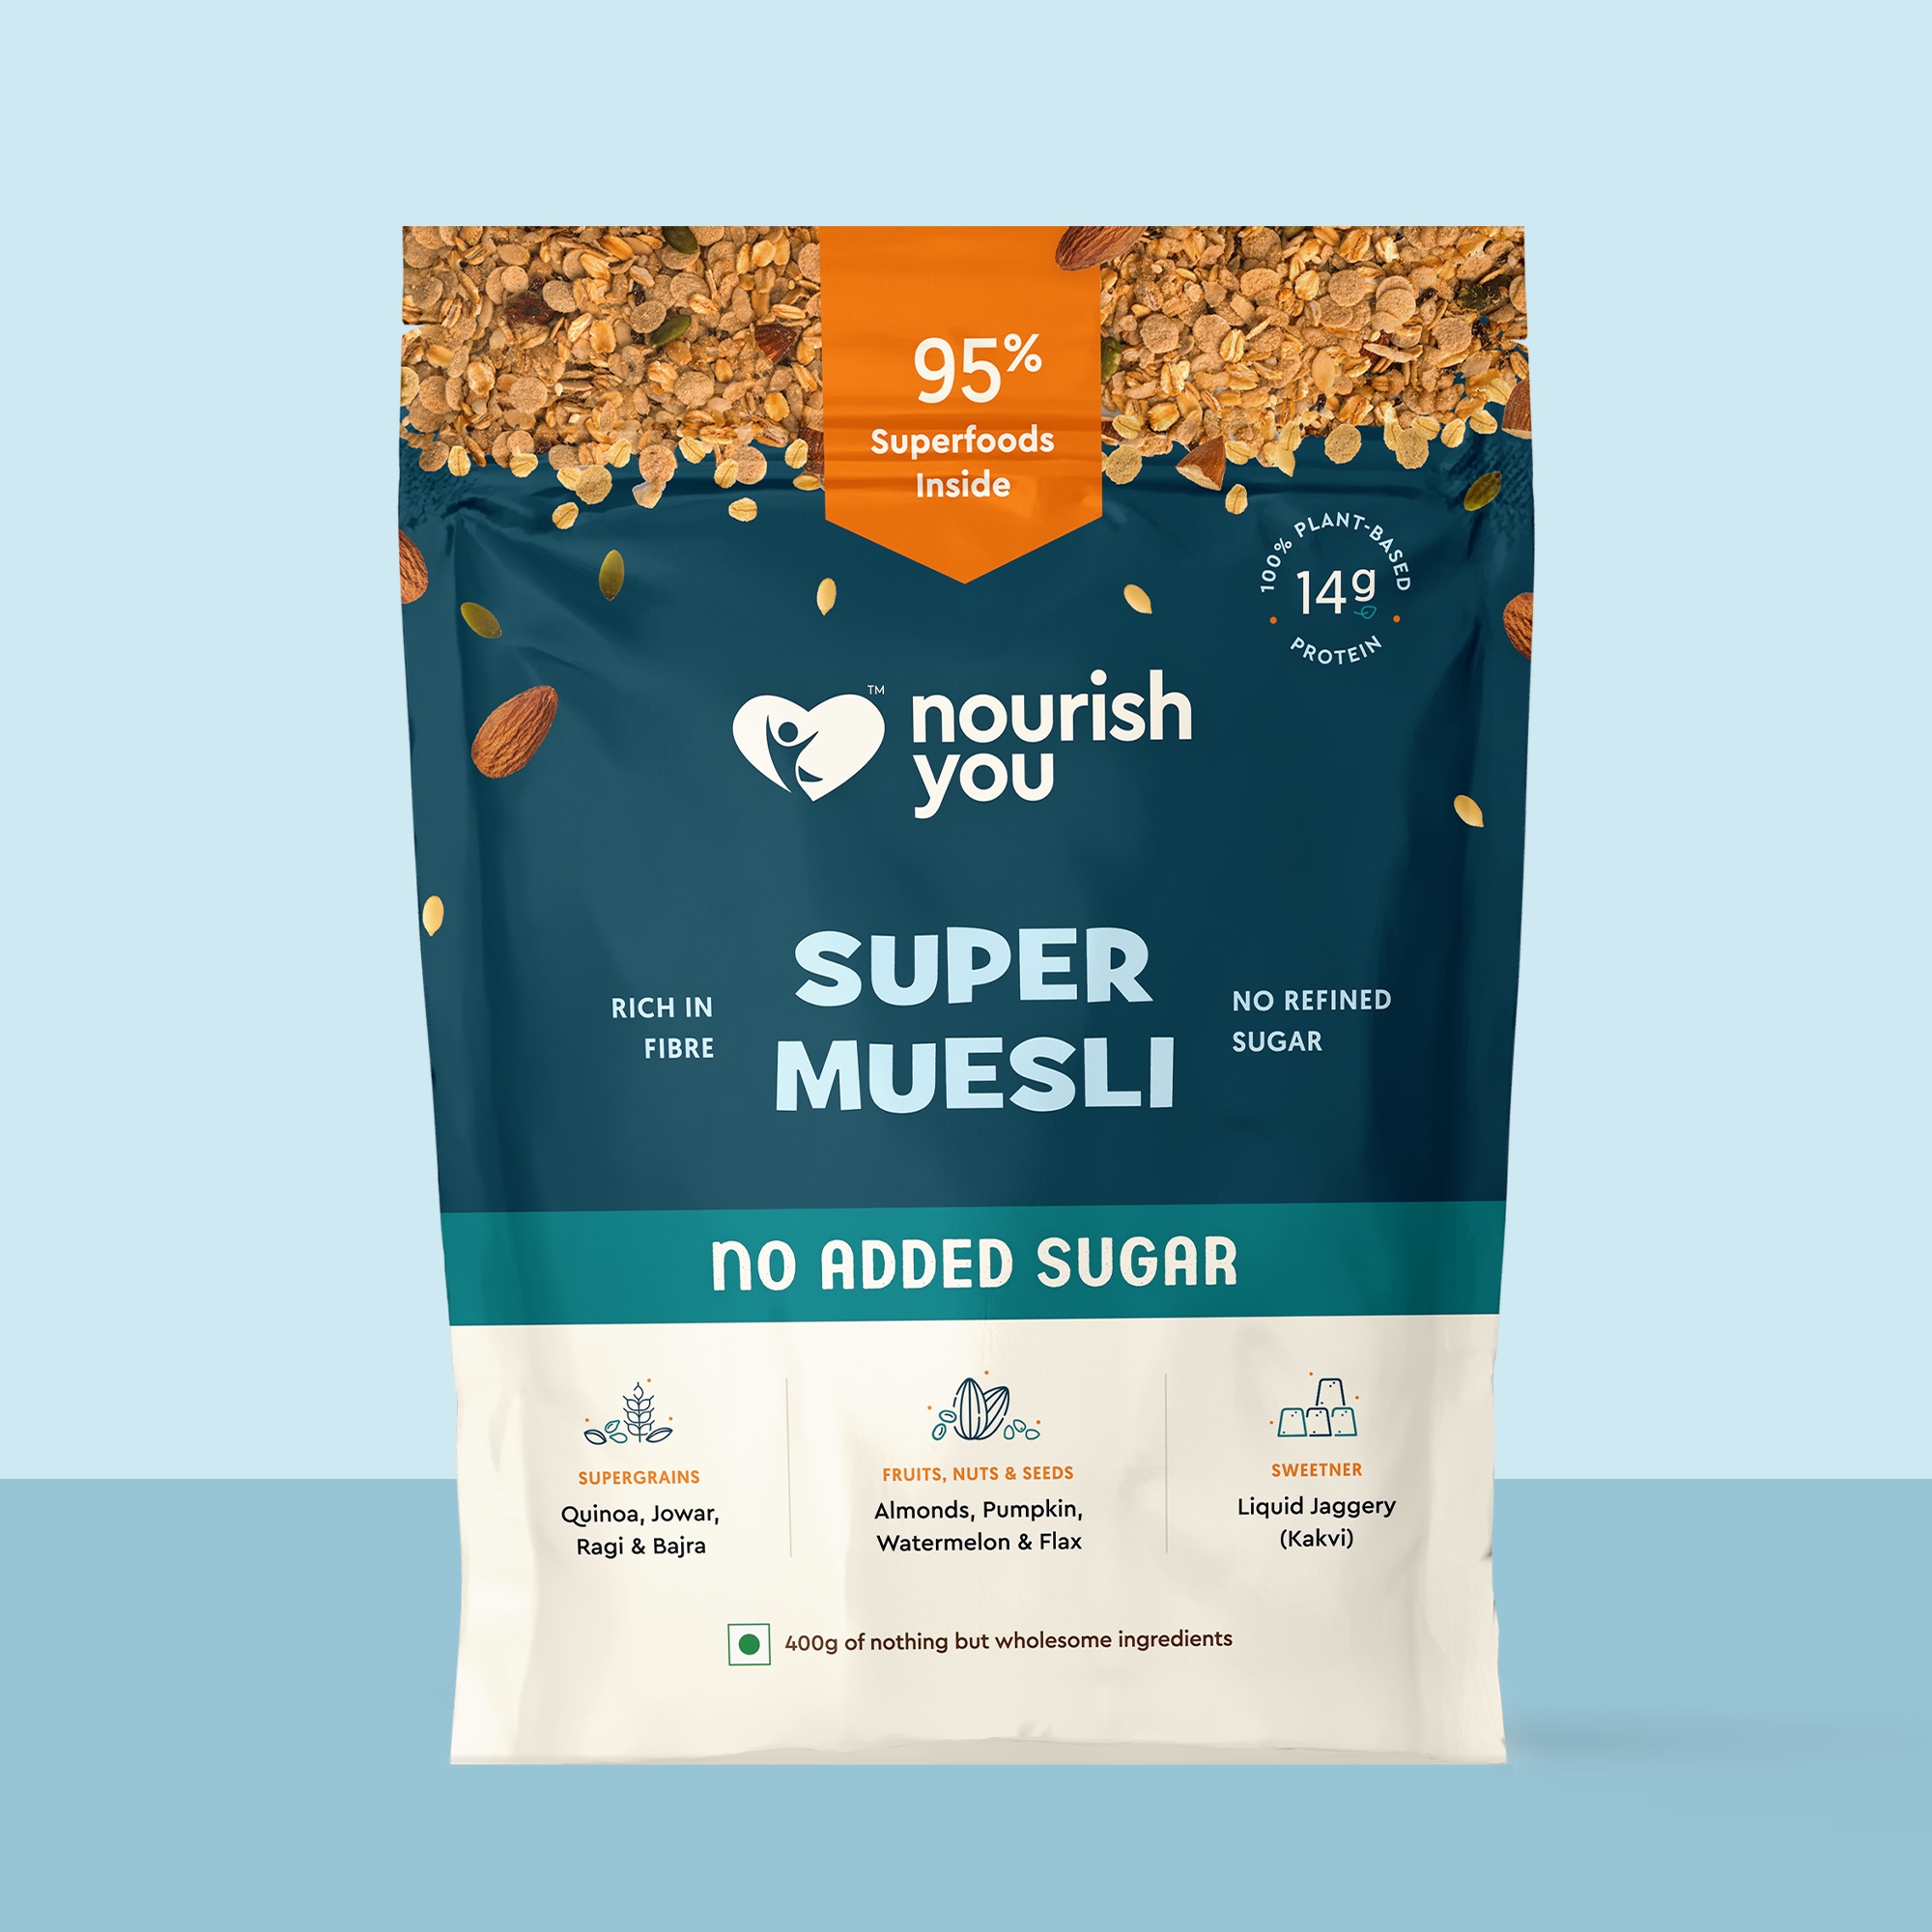 Nourish you Super muesli - no added sugar